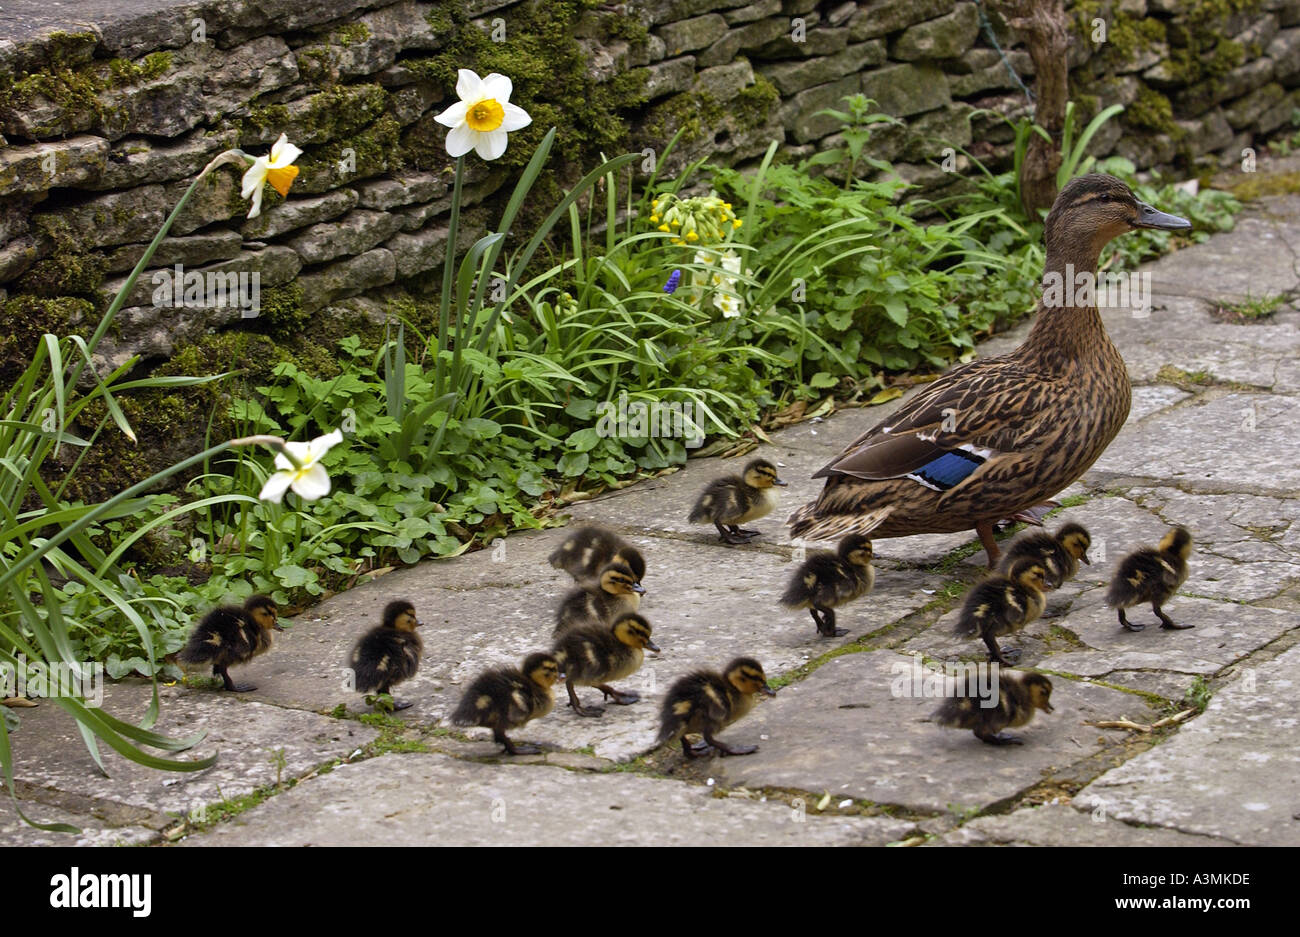 Mallard duck with her thirteen ducklings in an English country garden Stock Photo